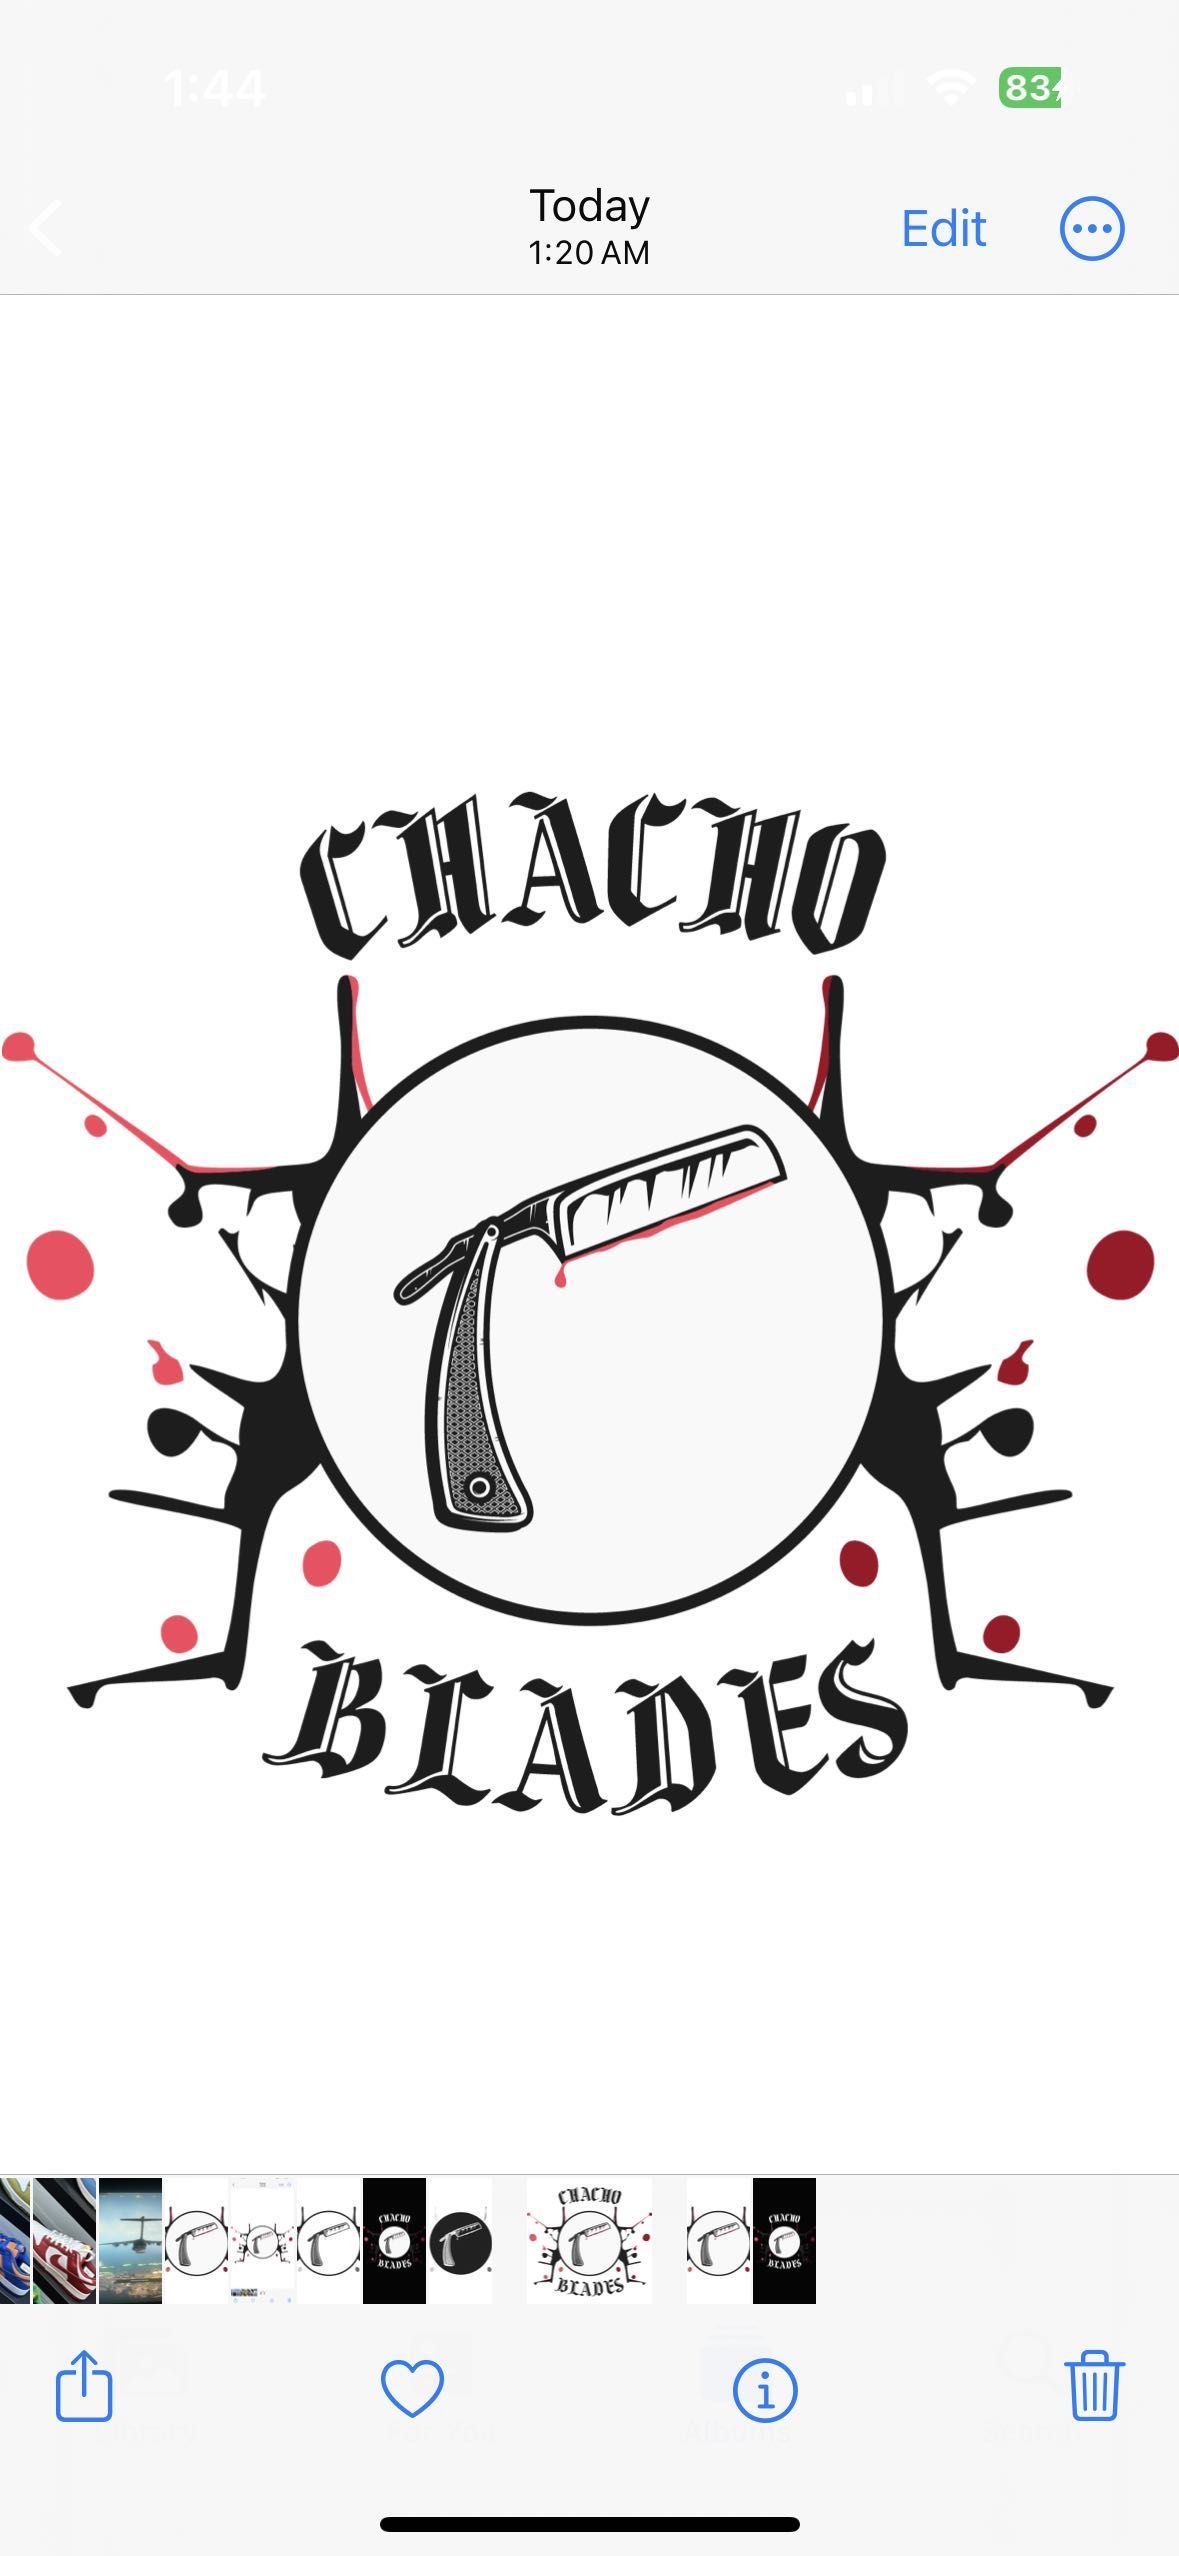 Chacho Blades, 1413 N 16th St, Phoenix, 85006